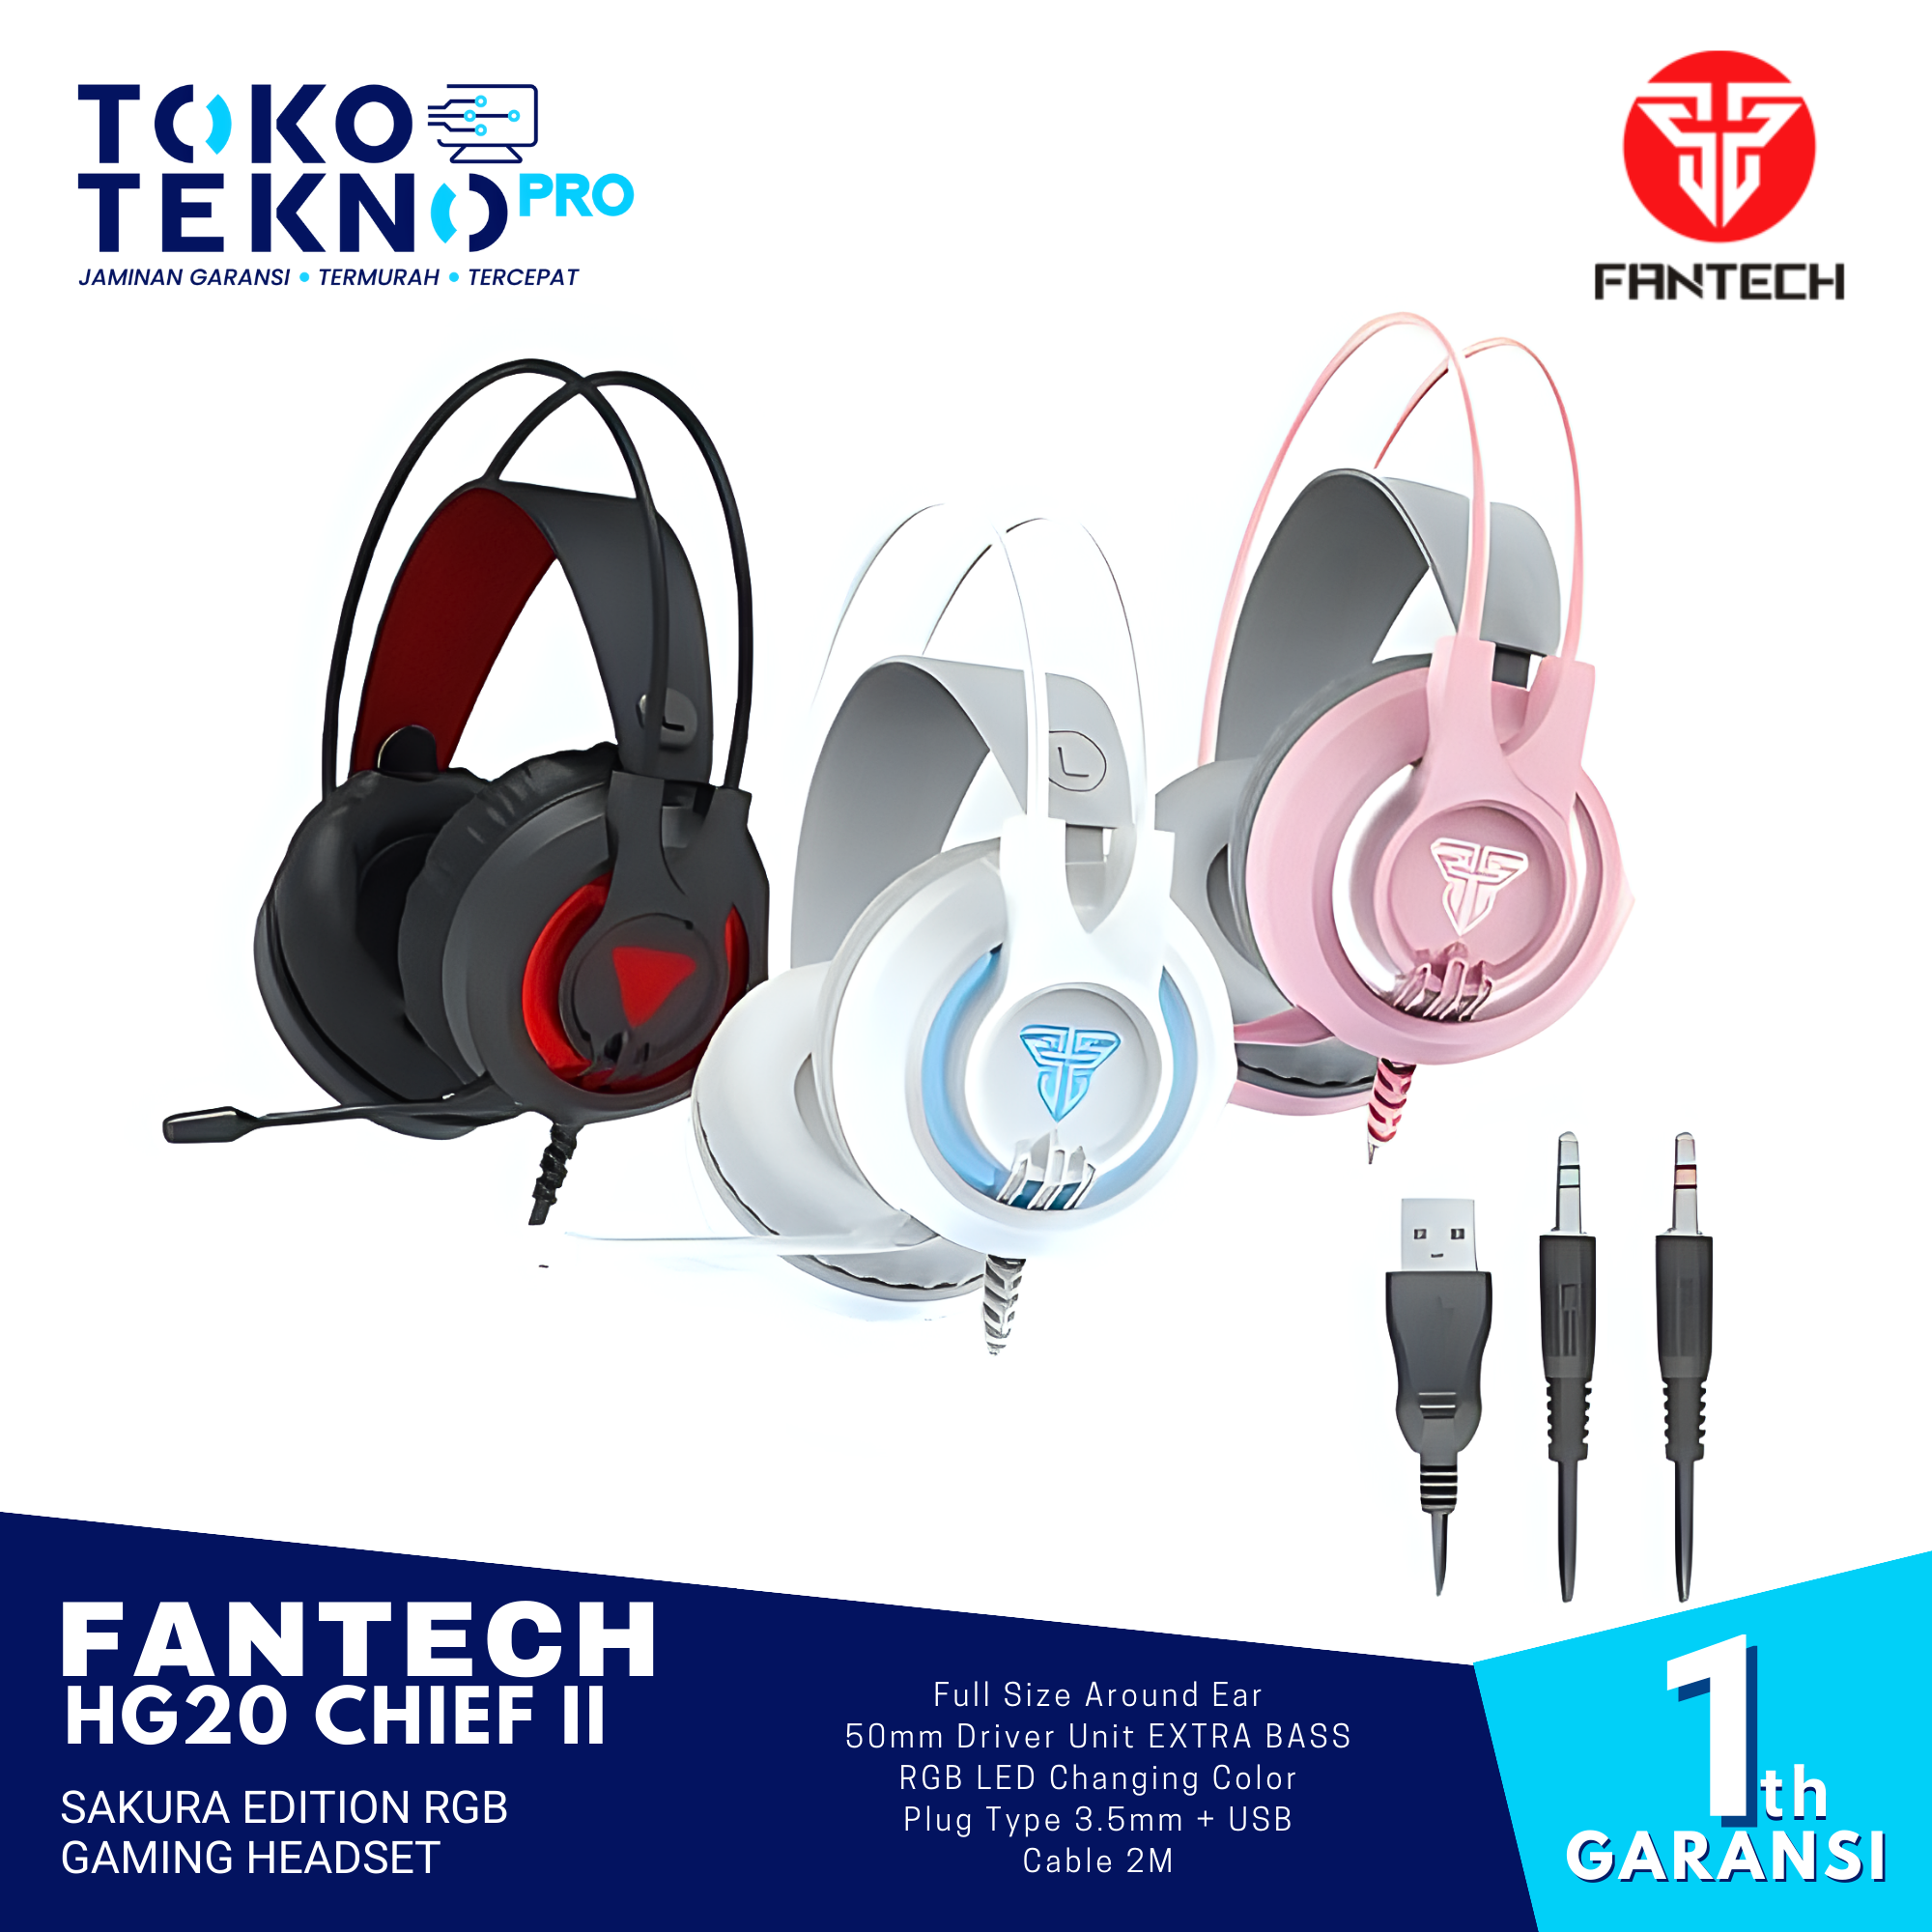 Fantech HG20 Chief II Sakura Edition RGB Gaming Headset